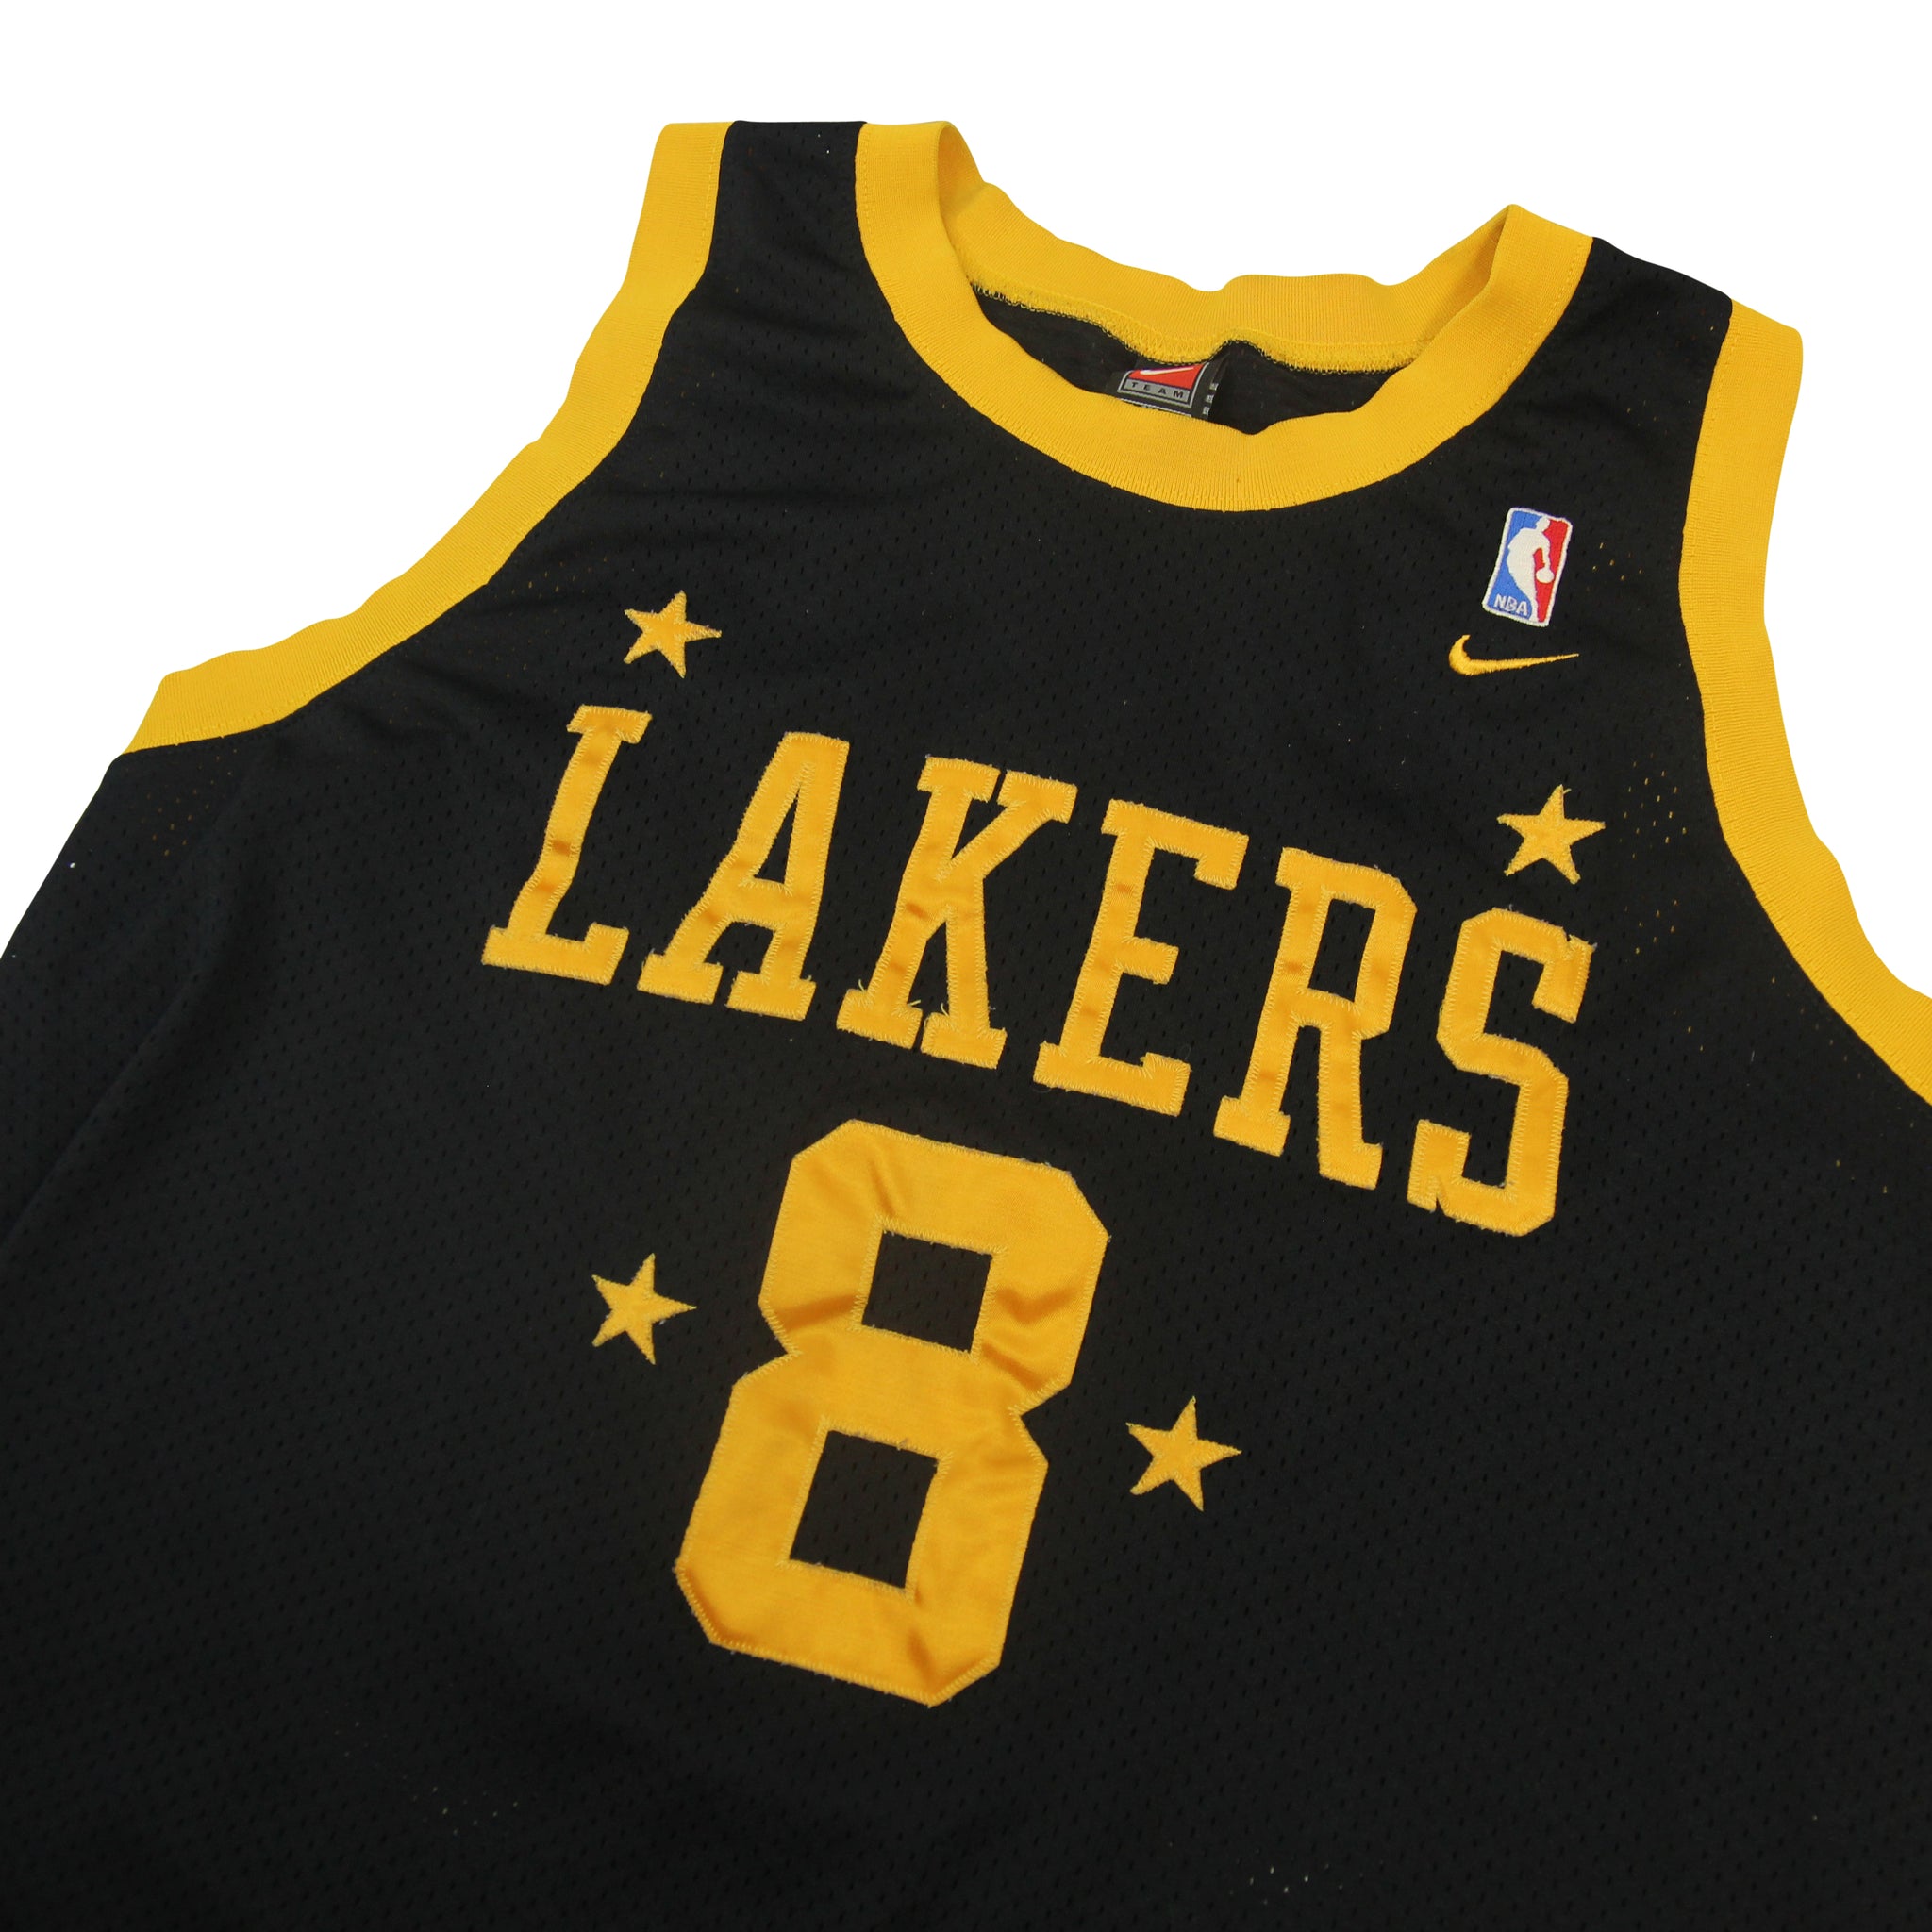 Nike NBA Los Angeles Lakers Jersey #8 Kobe Bryant Gold Star sz M+2